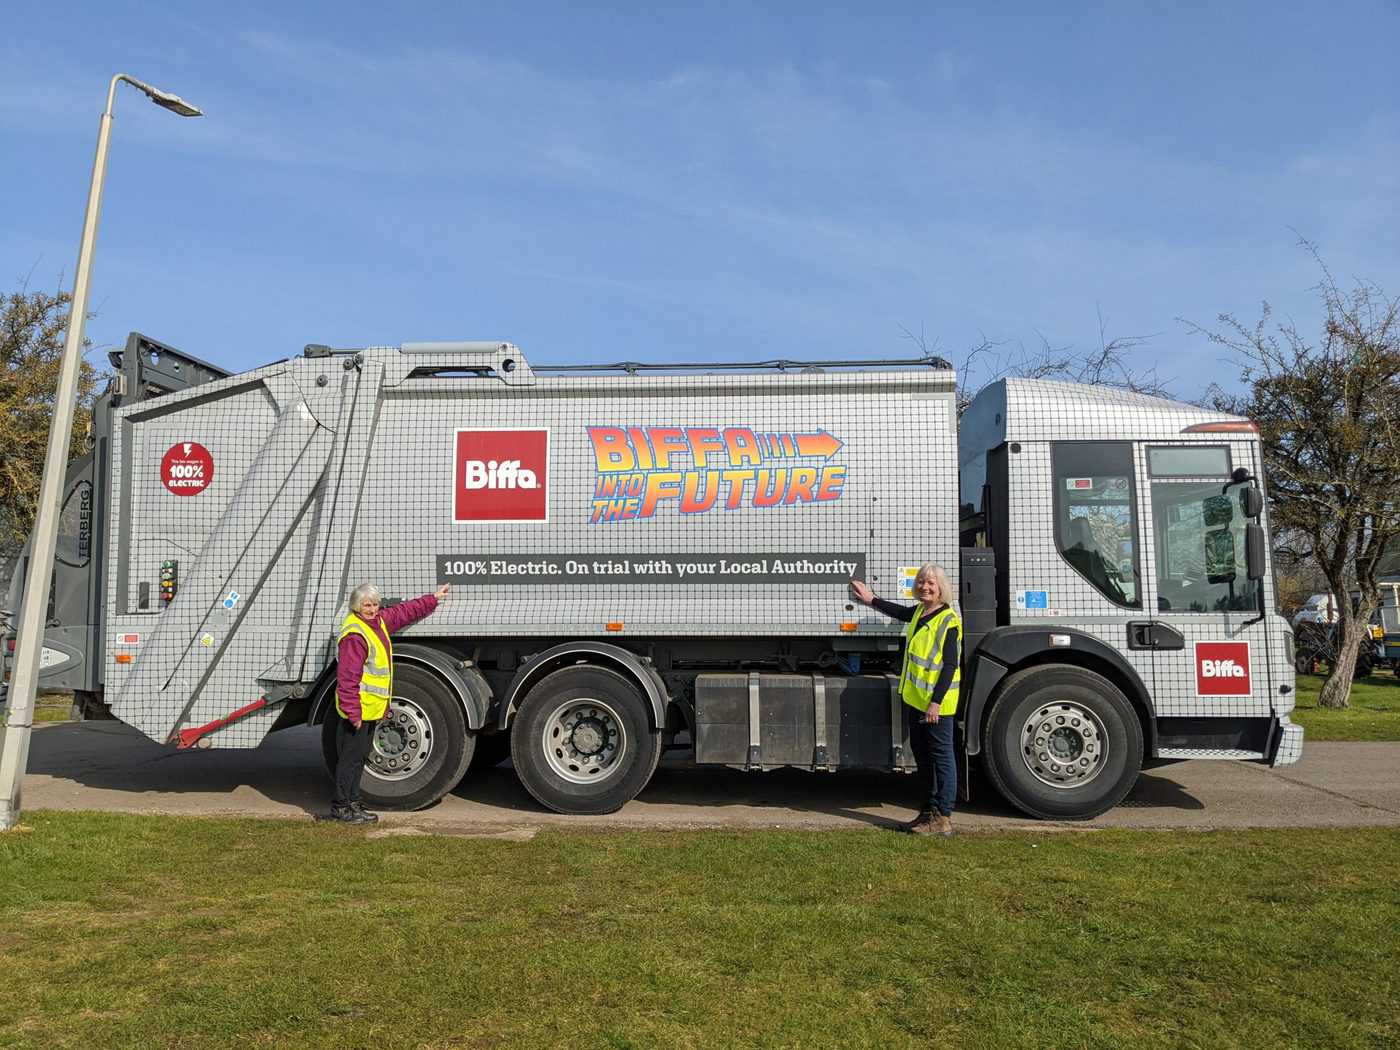 Biffa 'Glitterball' electric bin truck starts rounds in Oxfordshire